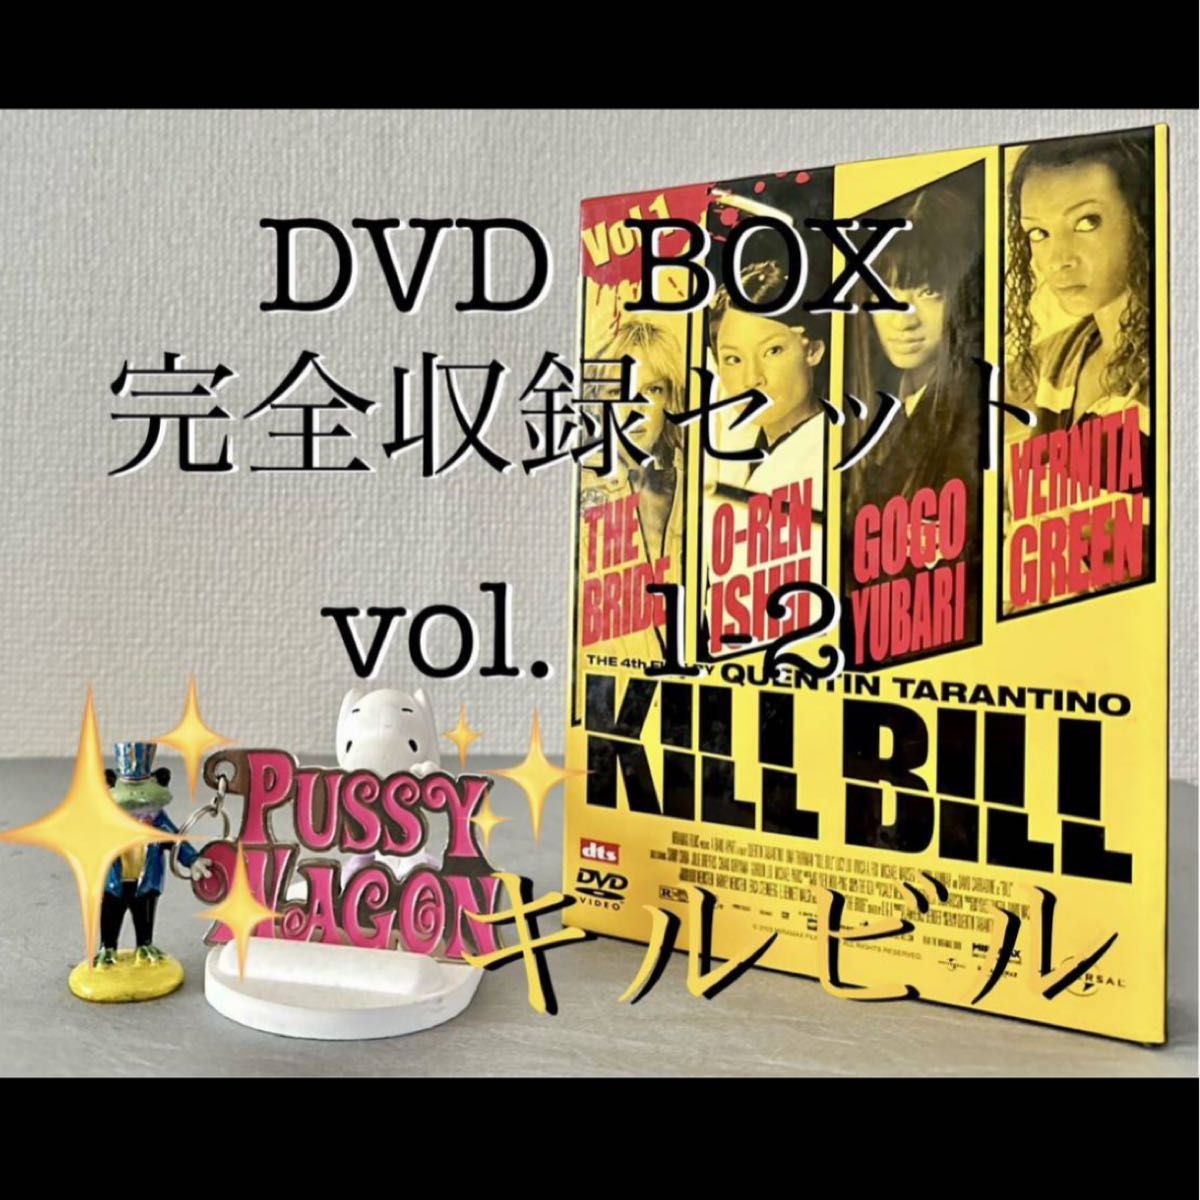 DVDセット キルビル Vol.1 & 2 ツインパック 完全収録版 【激レア 本物】 プッシーワゴン キーリング 